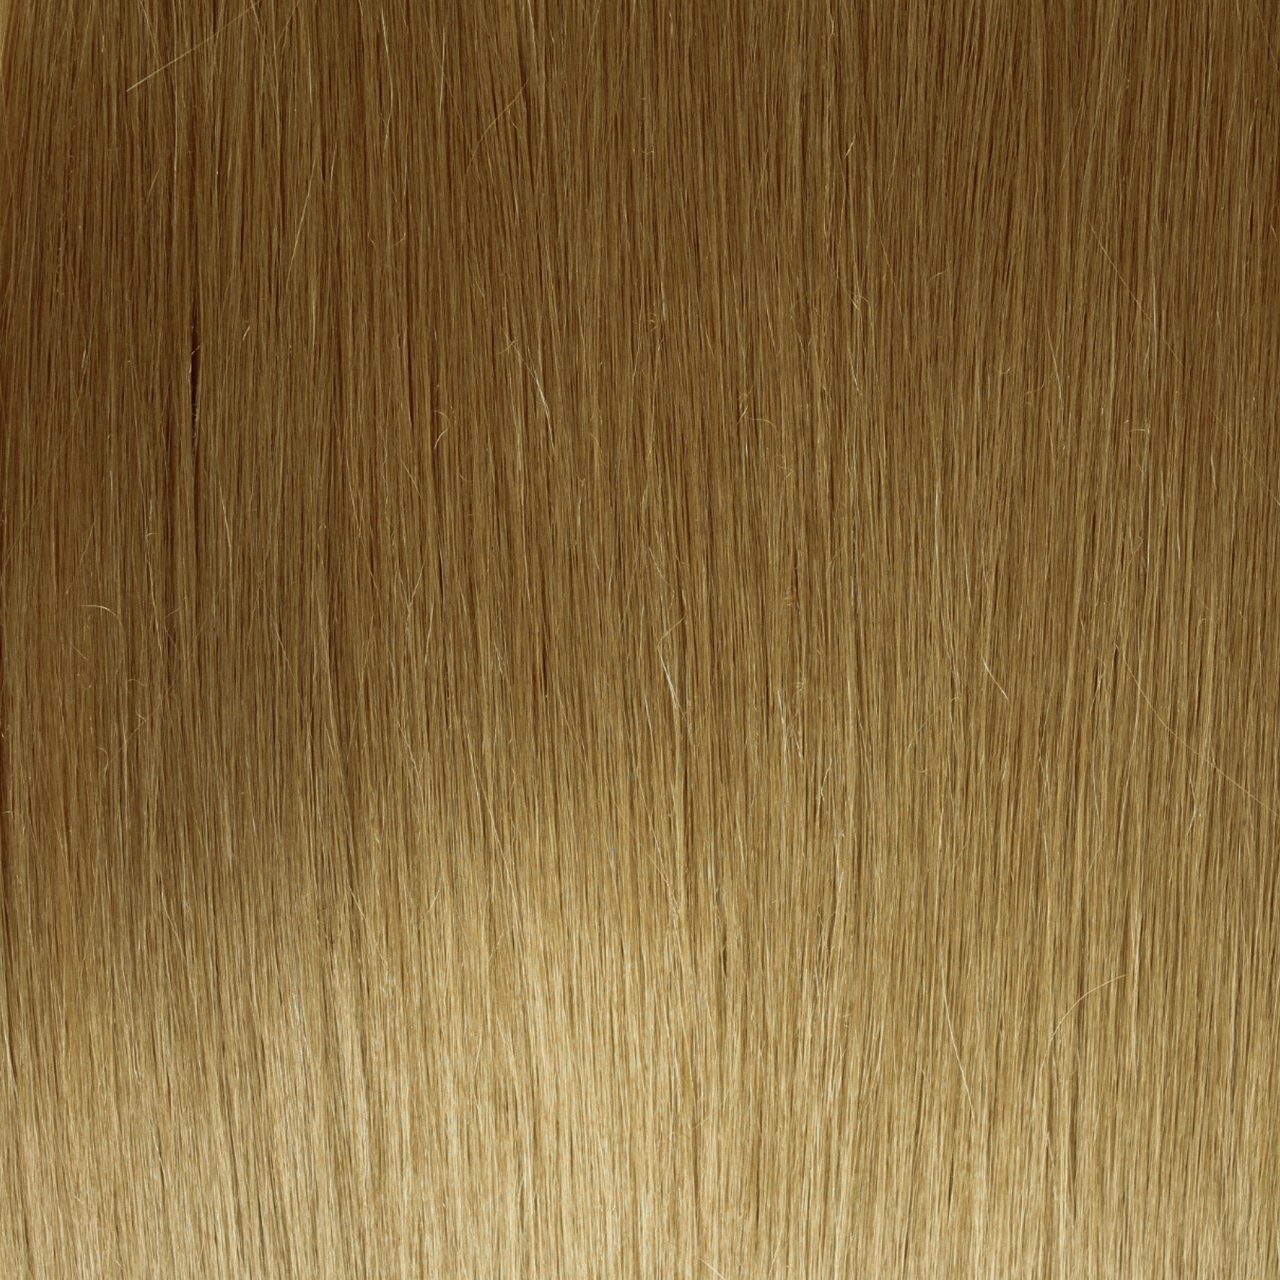 Haarknoten S-10 Chignon Kunsthaar-Extension hair2heart Kunsthaar aus